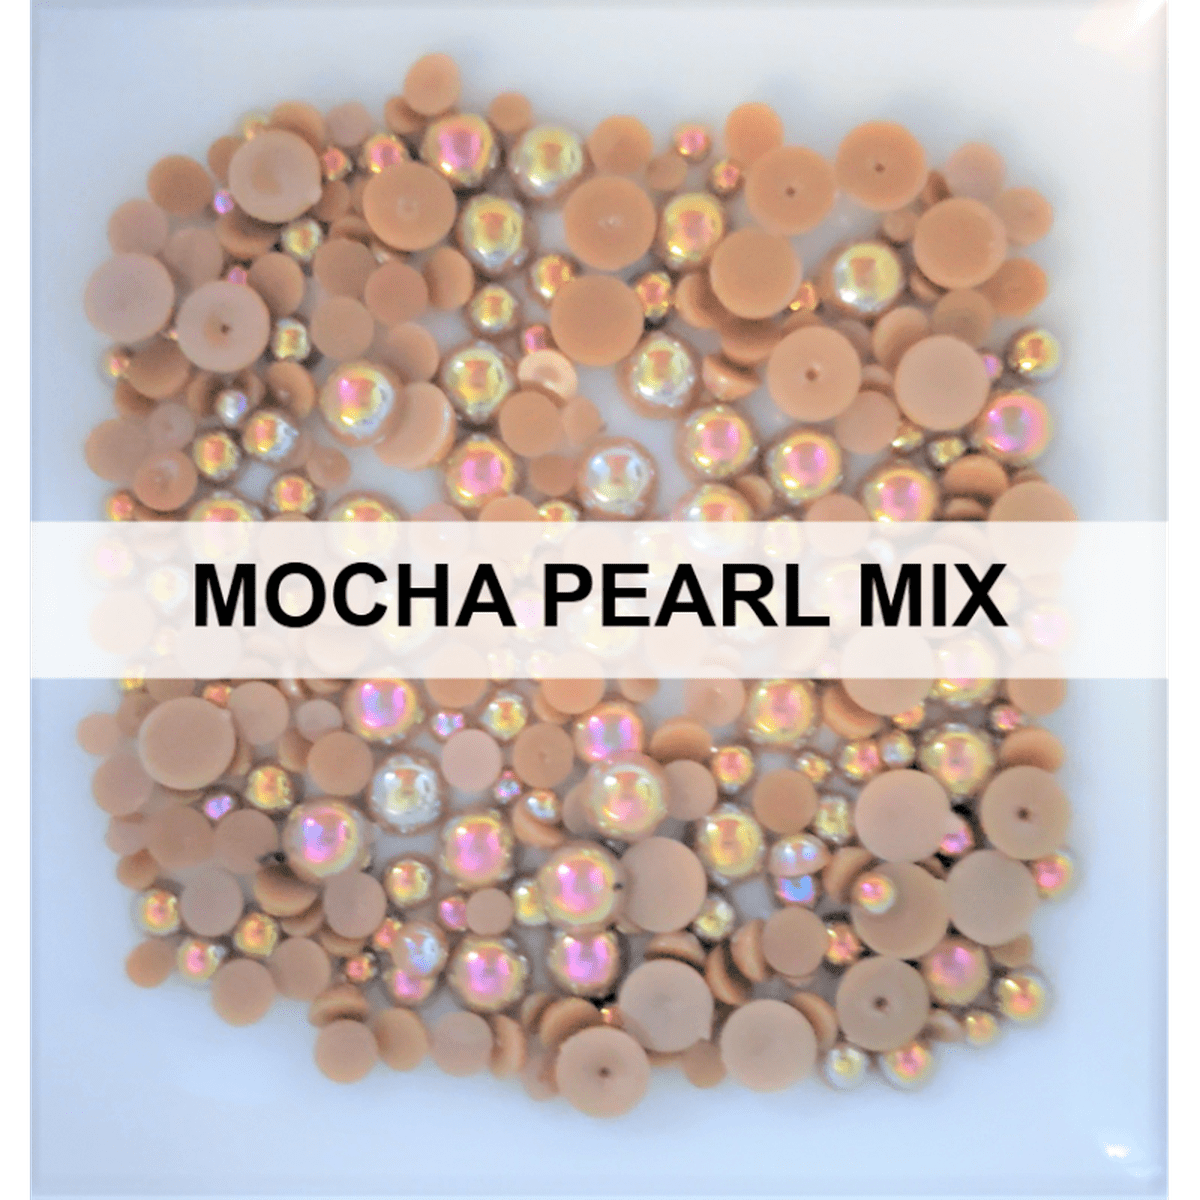 Mocha Pearl Mix